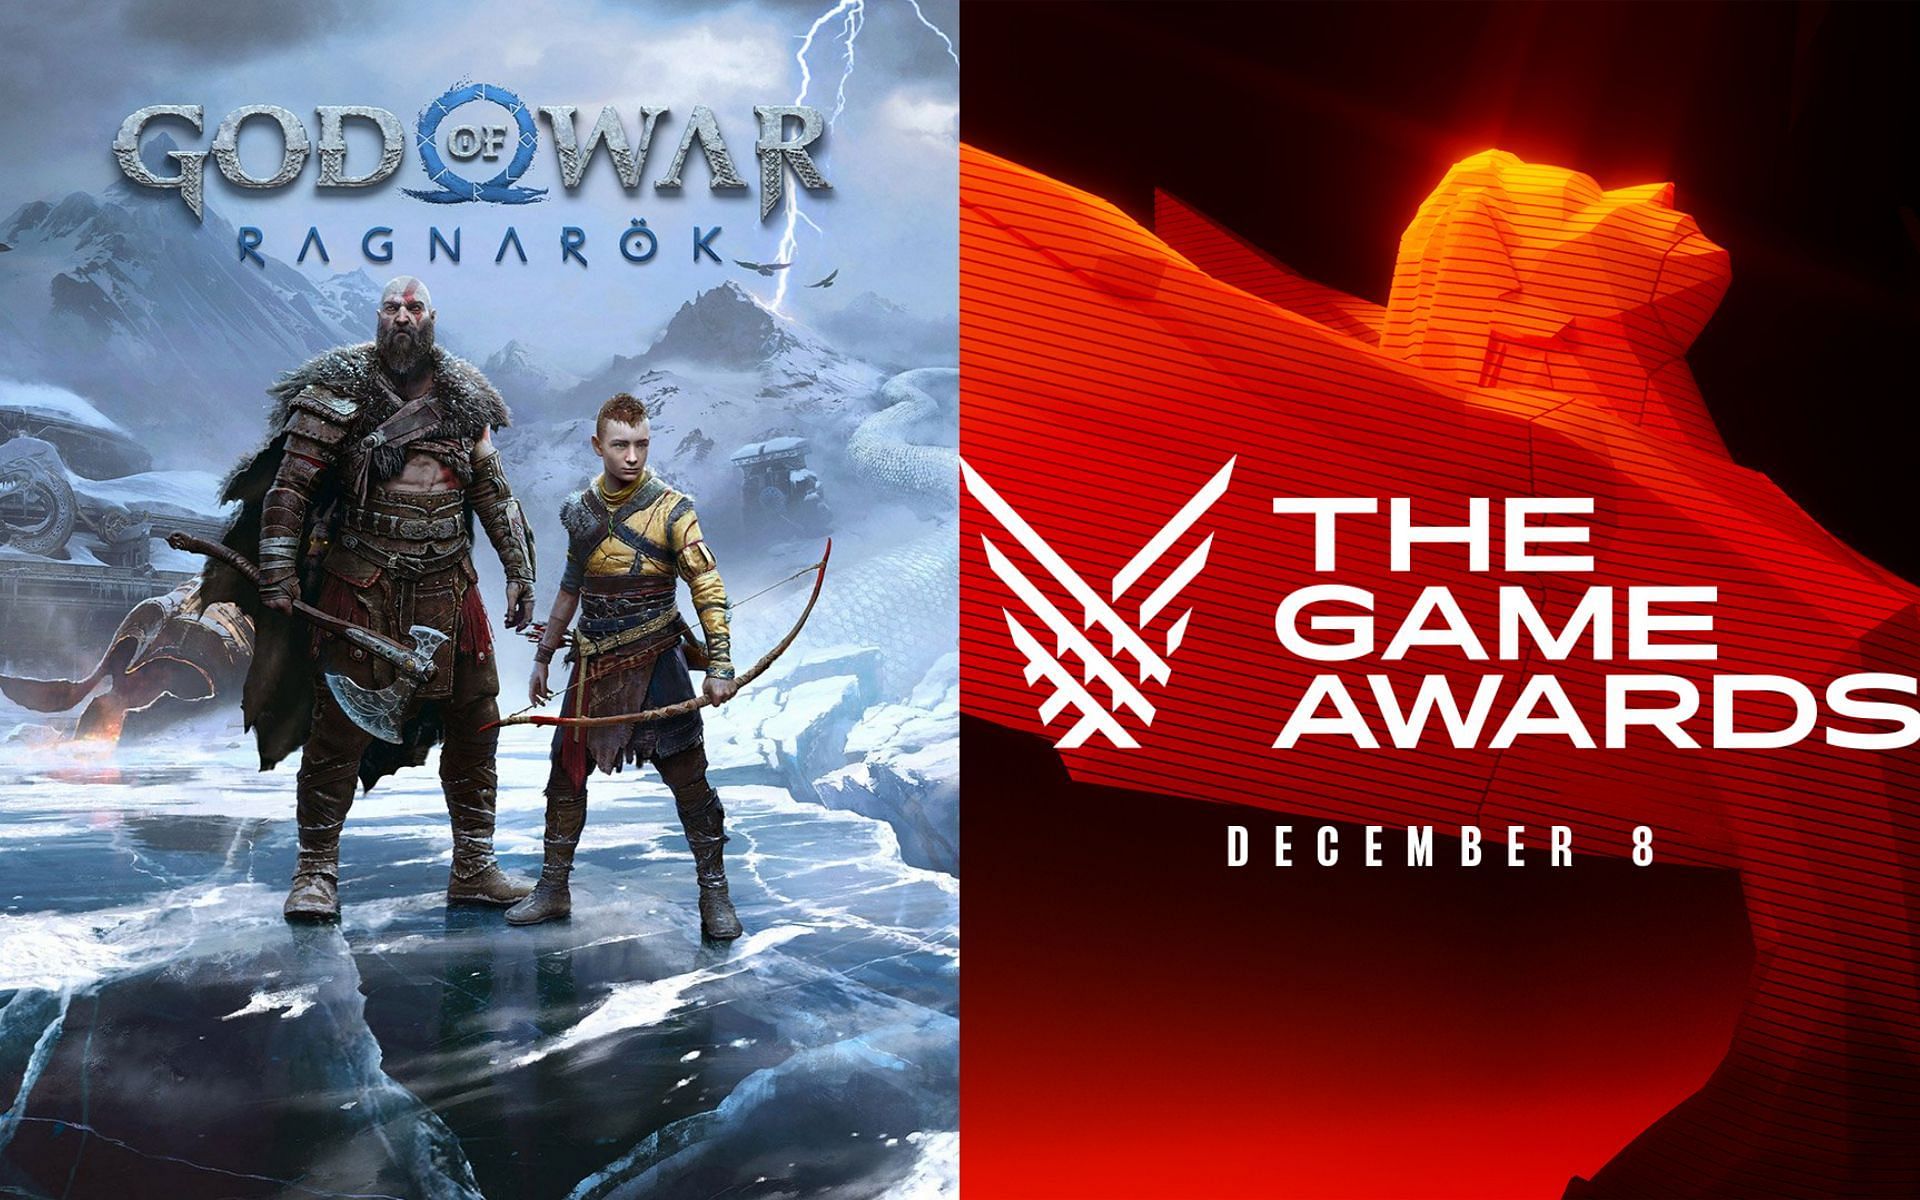 The Game Awards 2022 Nominations Sees God of War: Ragnarok Leading With 10  Awards Nods - IGN